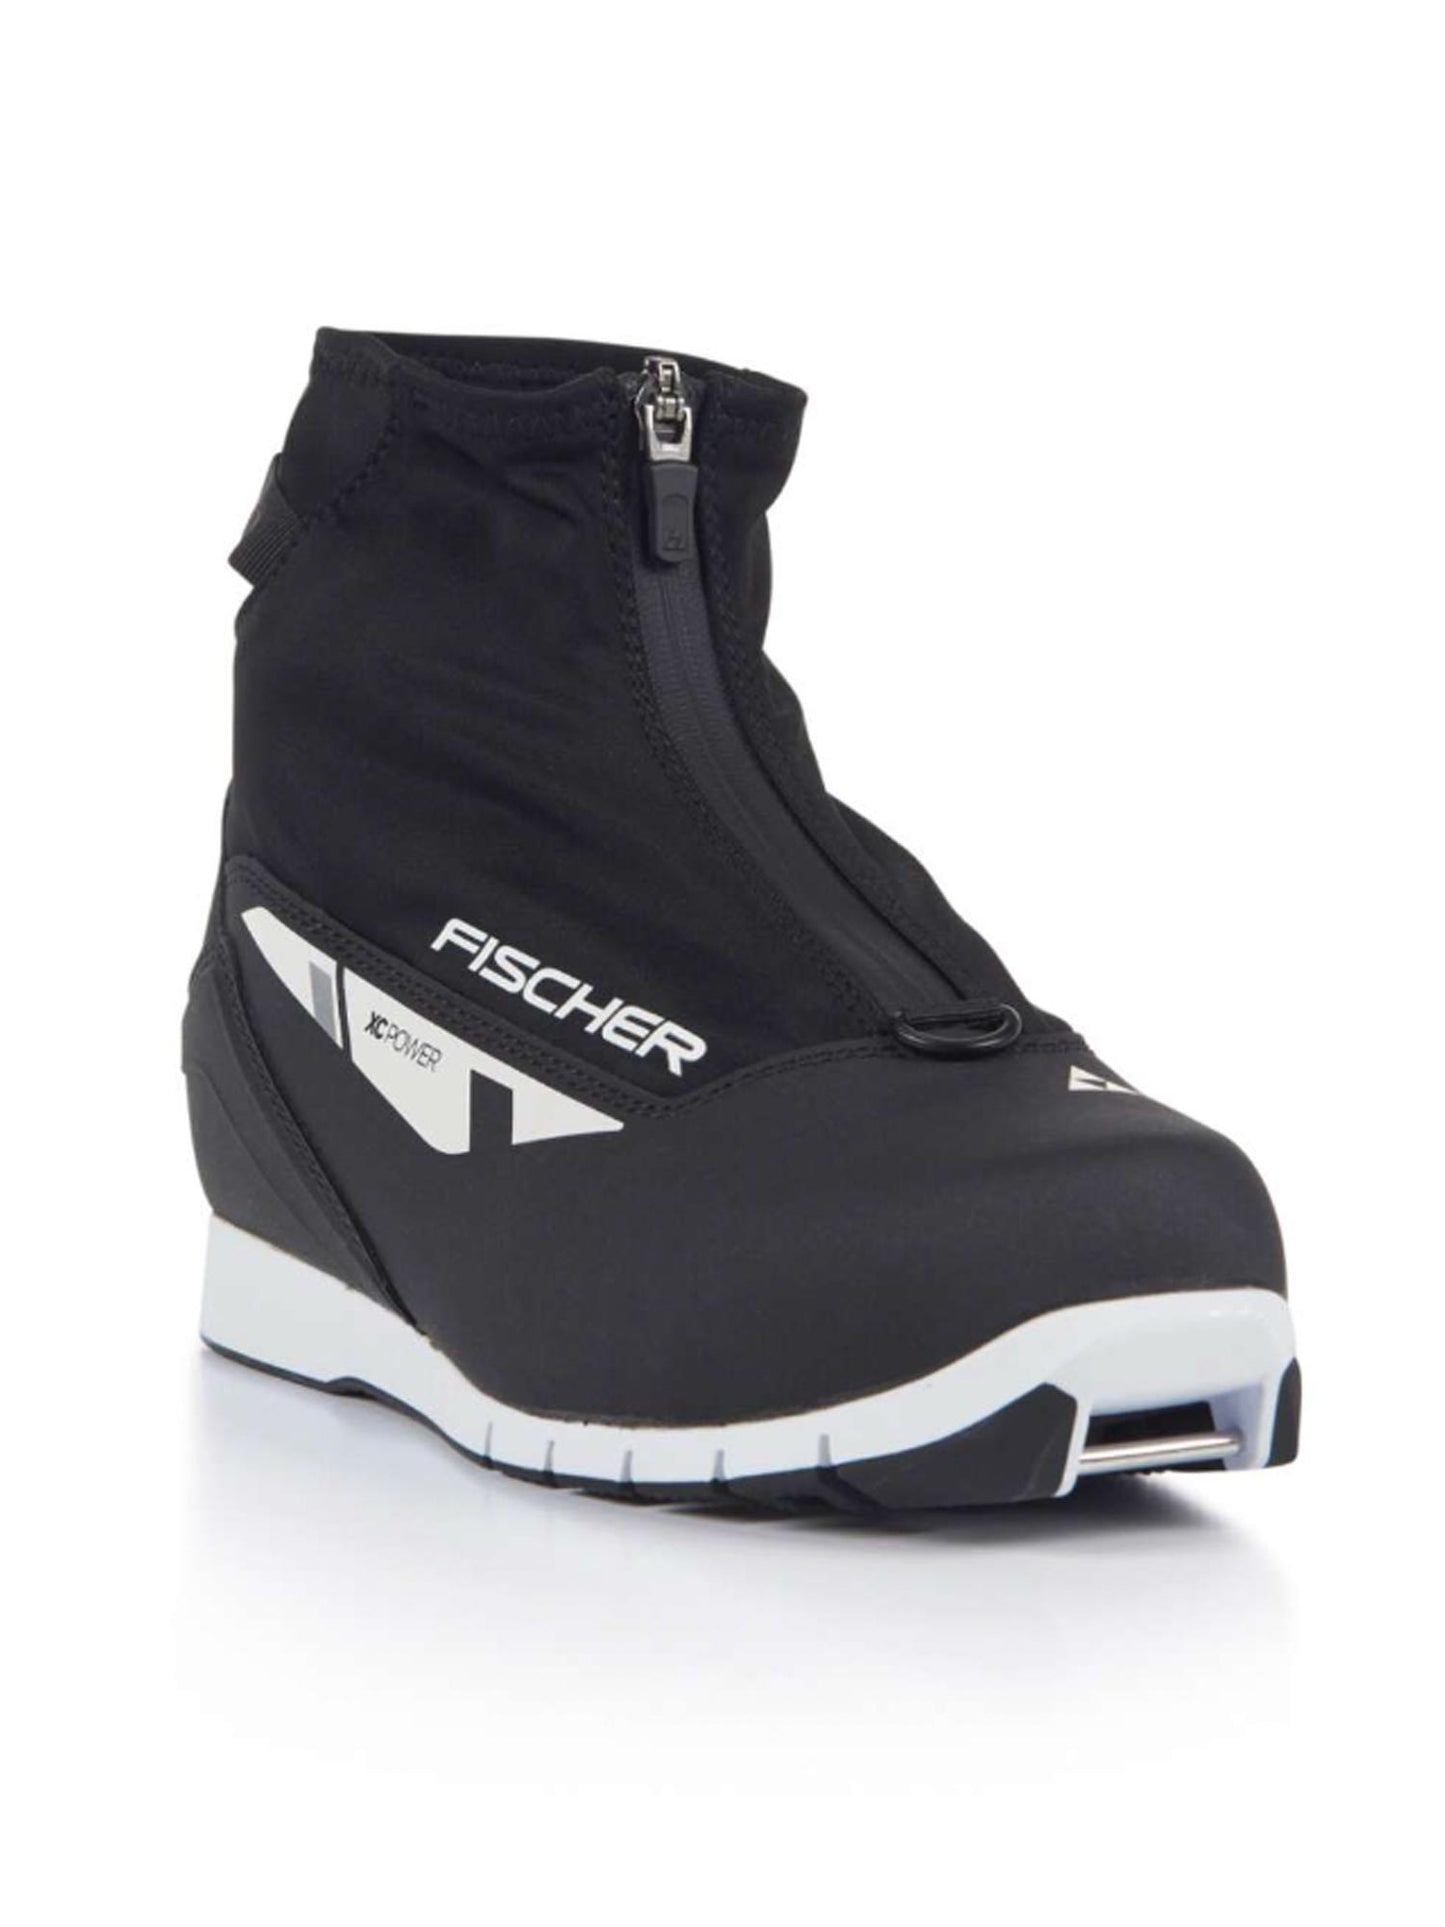 men's Fischer XC power boot, black and white